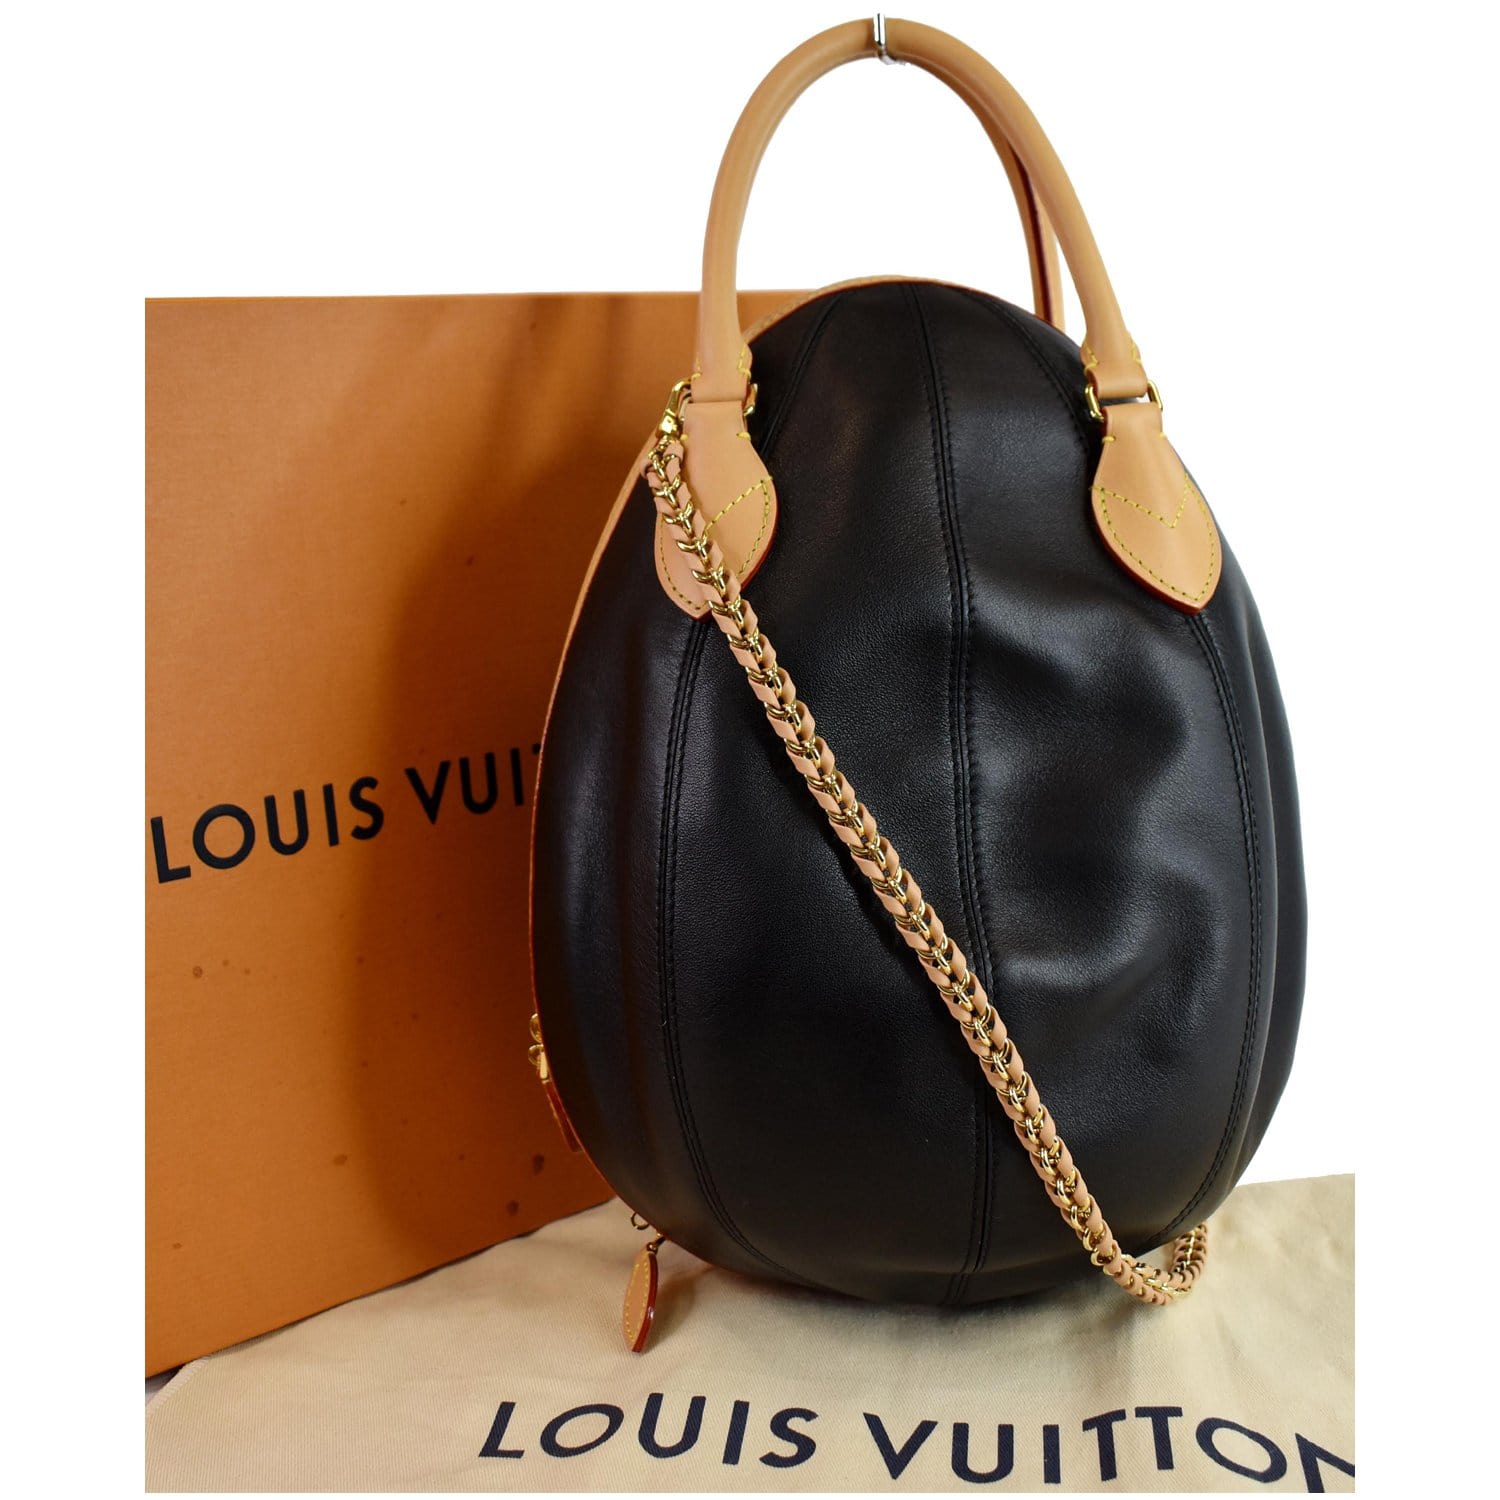 Louis Vuitton - Egg Bags  Выкройки сумок, Сумки, Сумочка